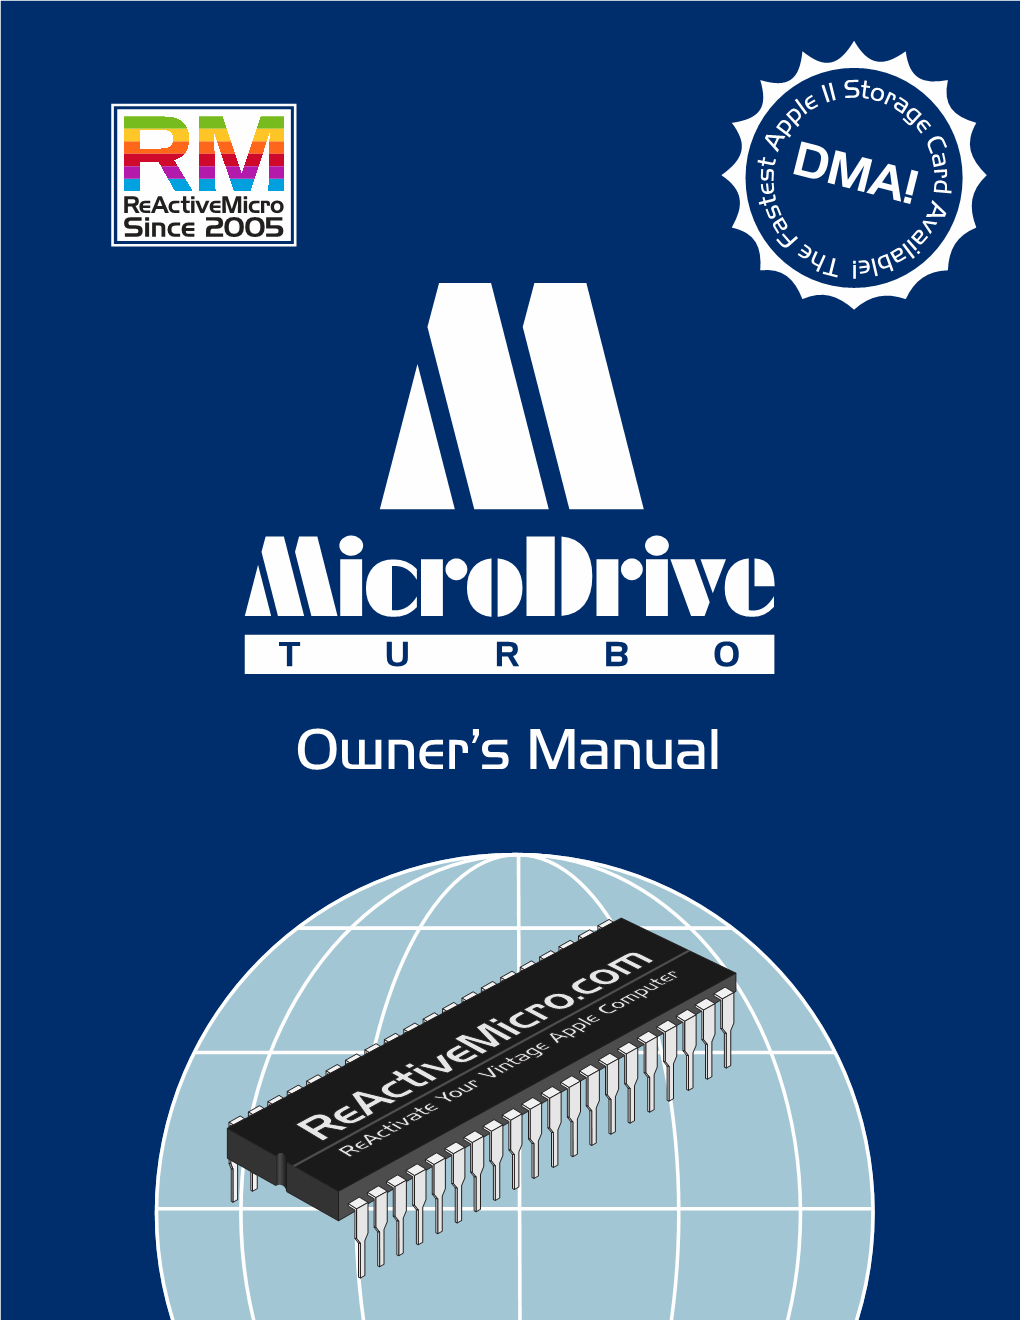 Microdrive Turbo